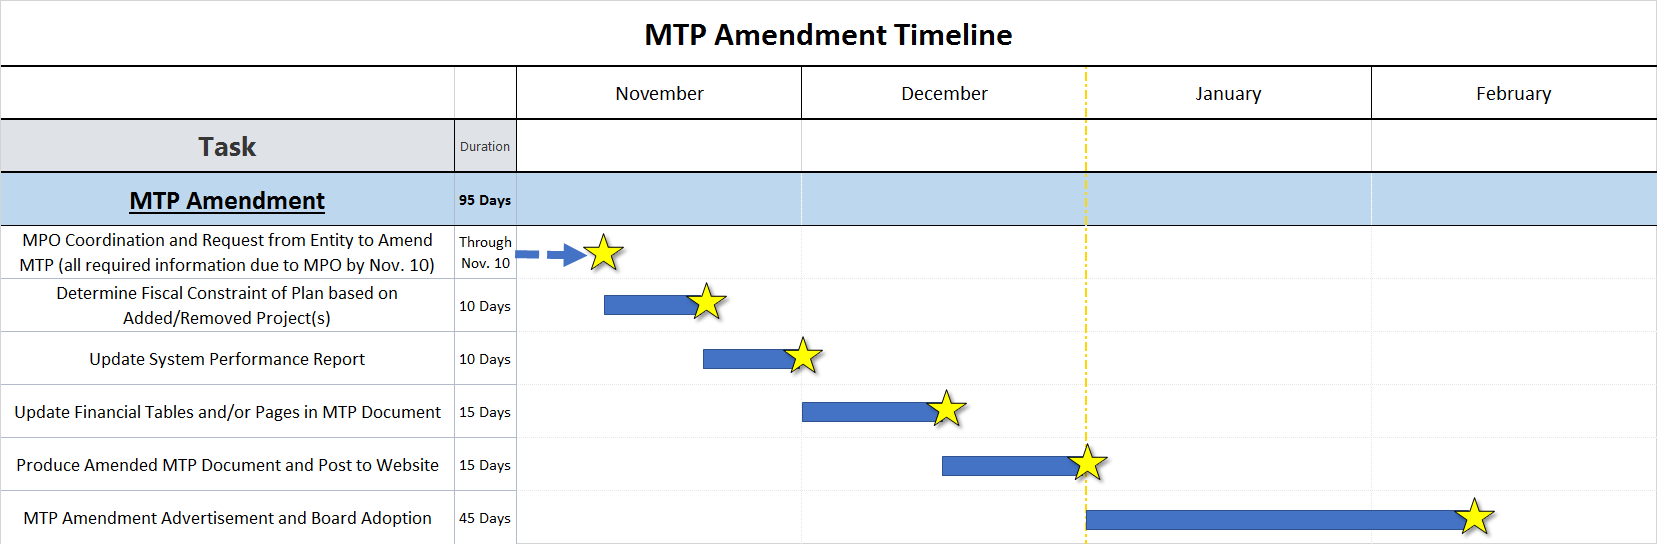 2045 MTP Amendment Timeline